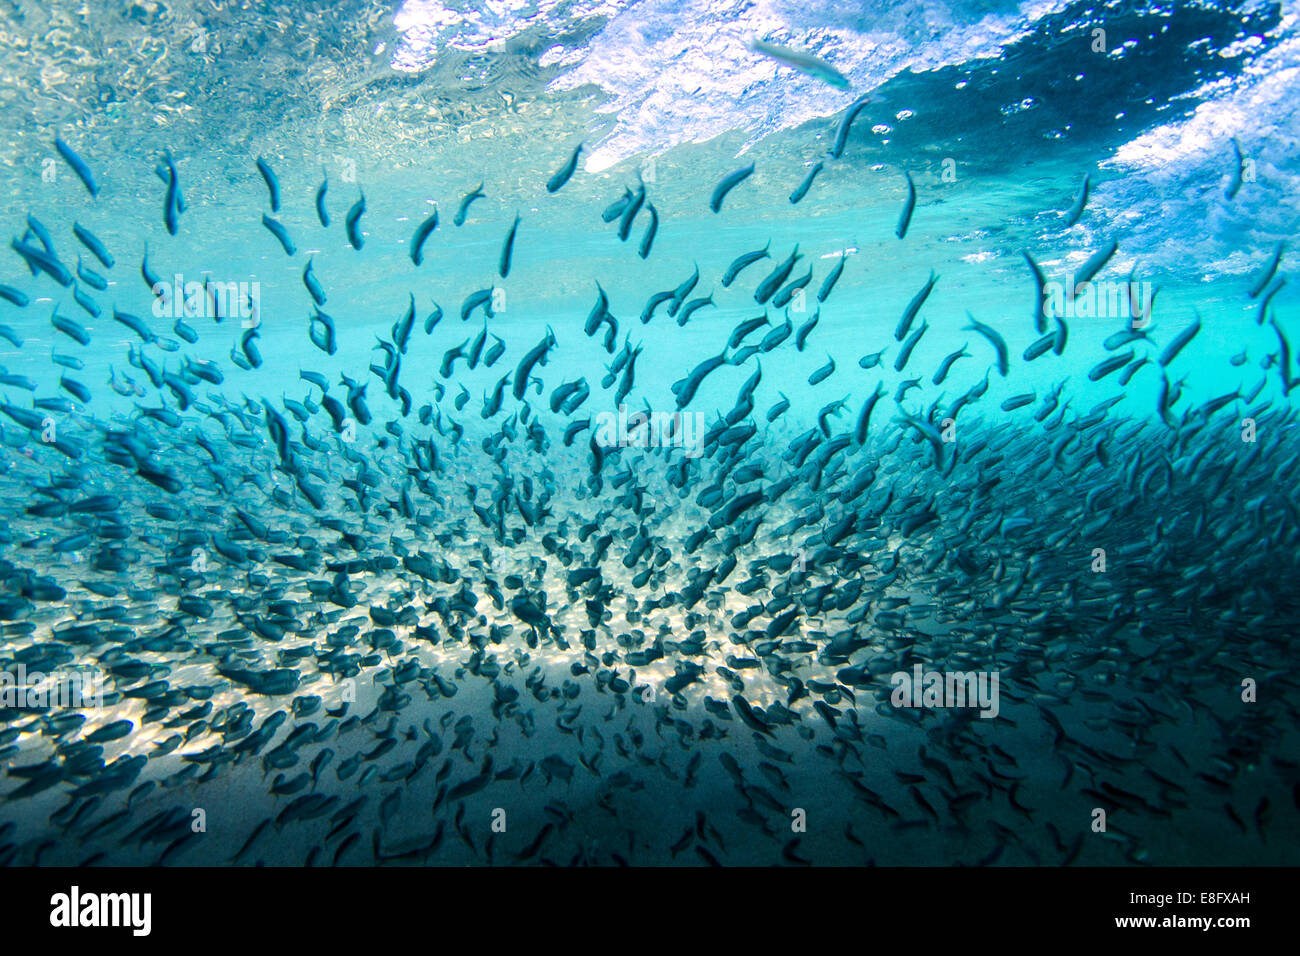 School of fish underwater Stock Photo